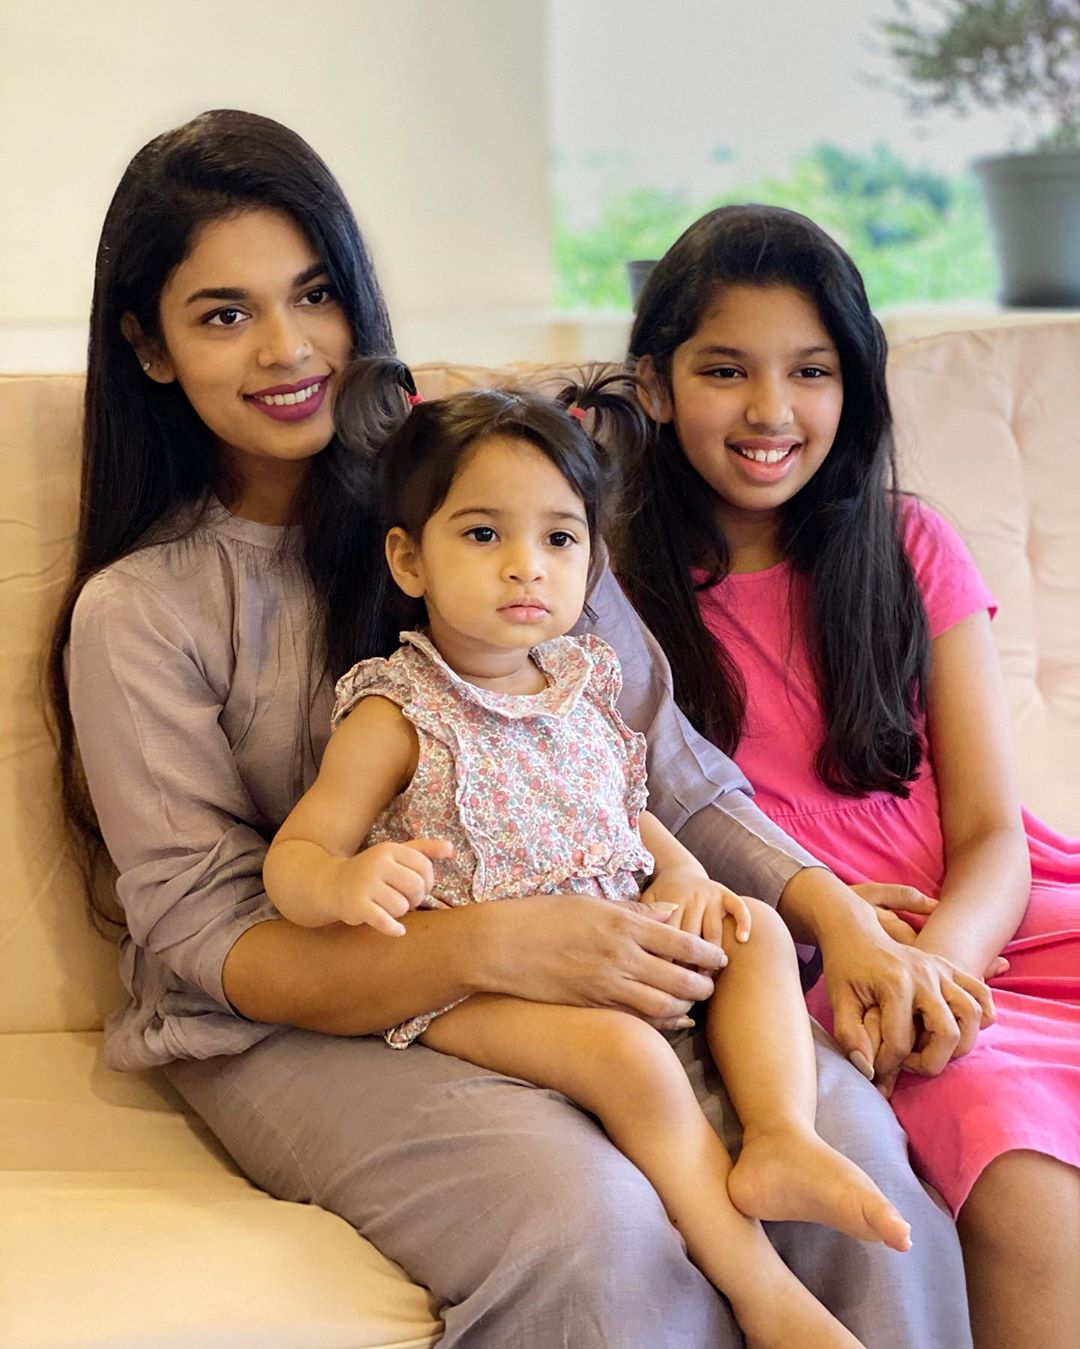 Sreeja's daughter's sensational post